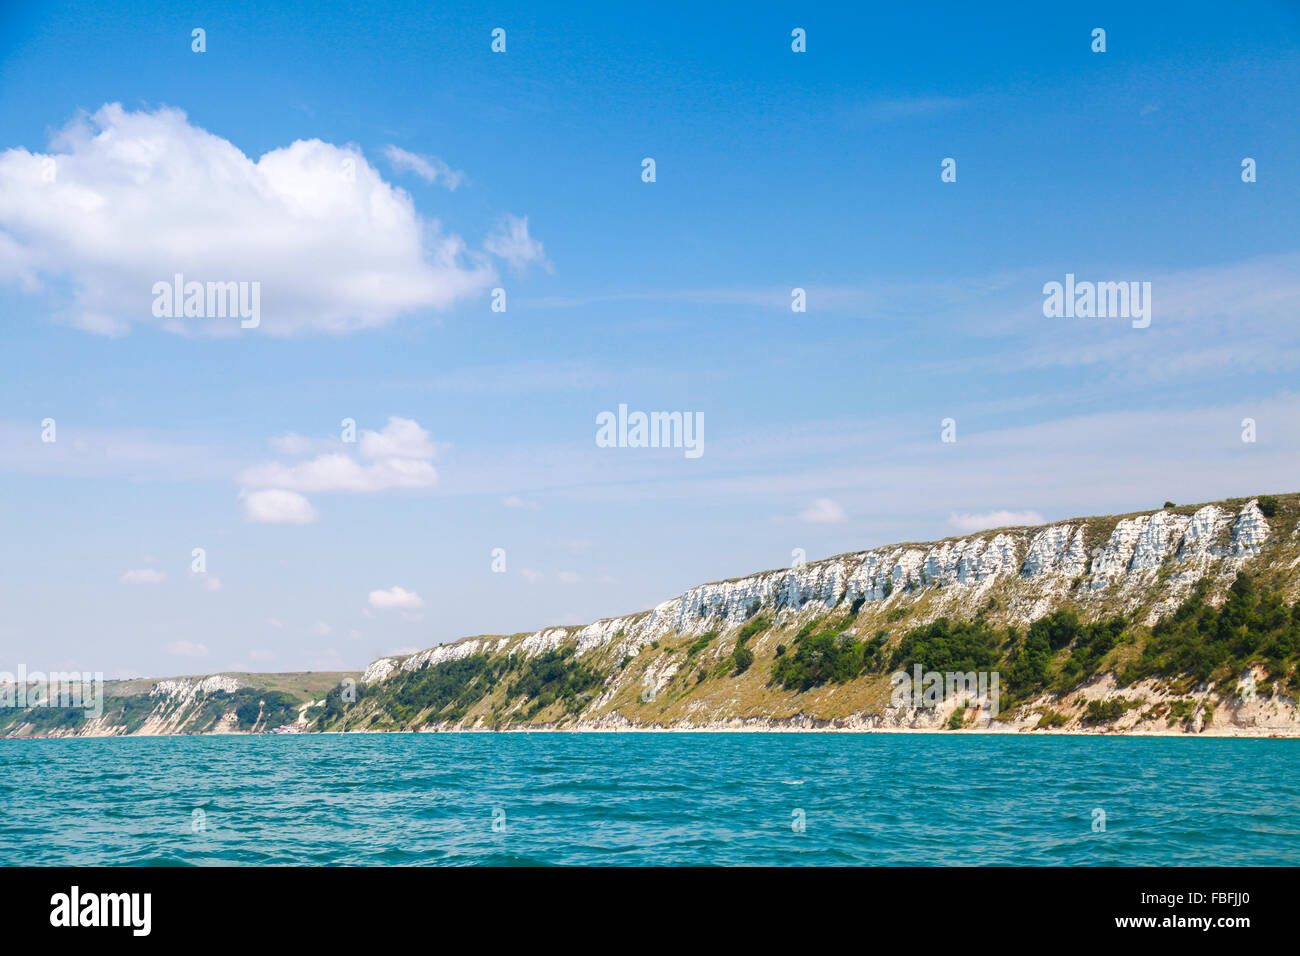 Bulgaria, Black Sea. Coastal landscape with white cliffs near Balchik resort town Stock Photo